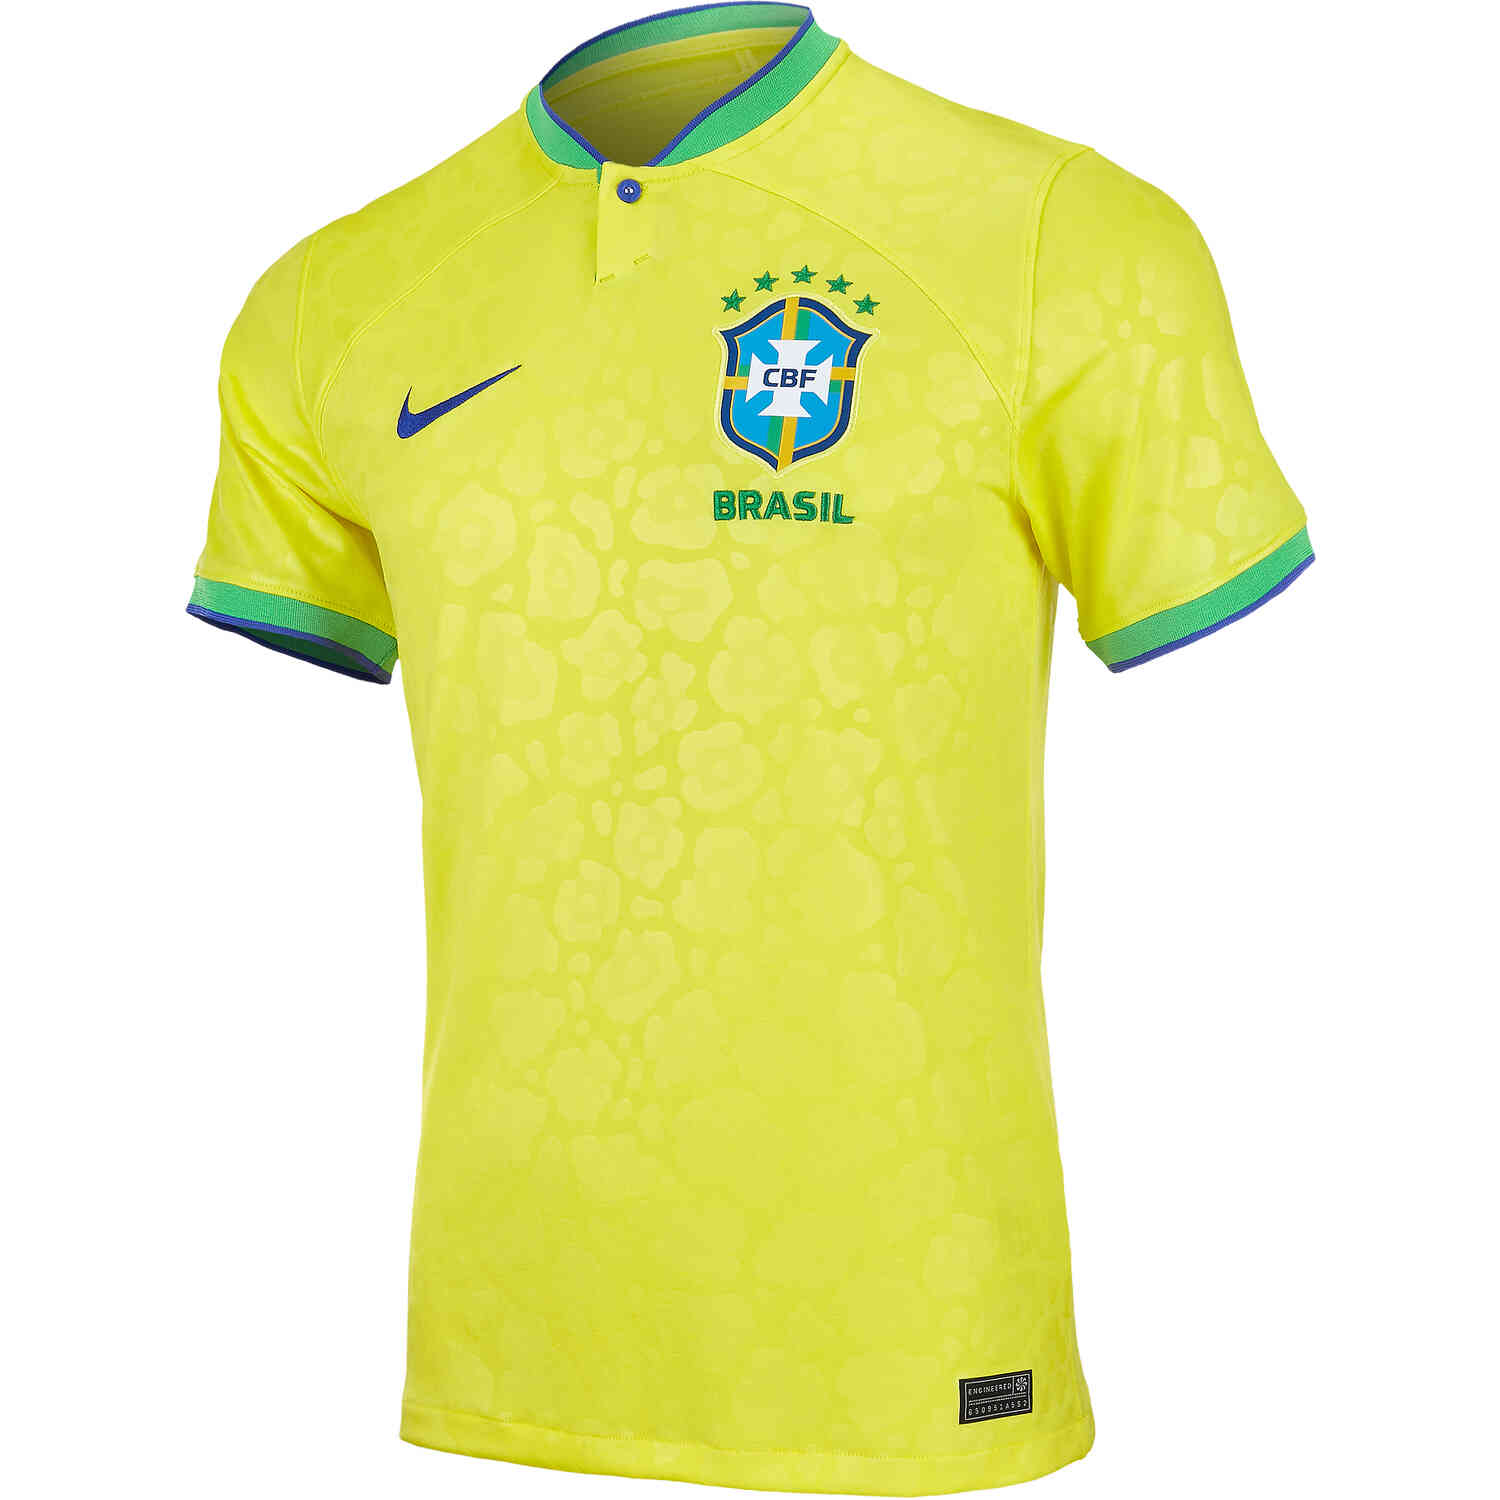 Brazil Brasil Brazilian Football Soccer Team T-Shirt Jersey - All Sizes S  to 3XL